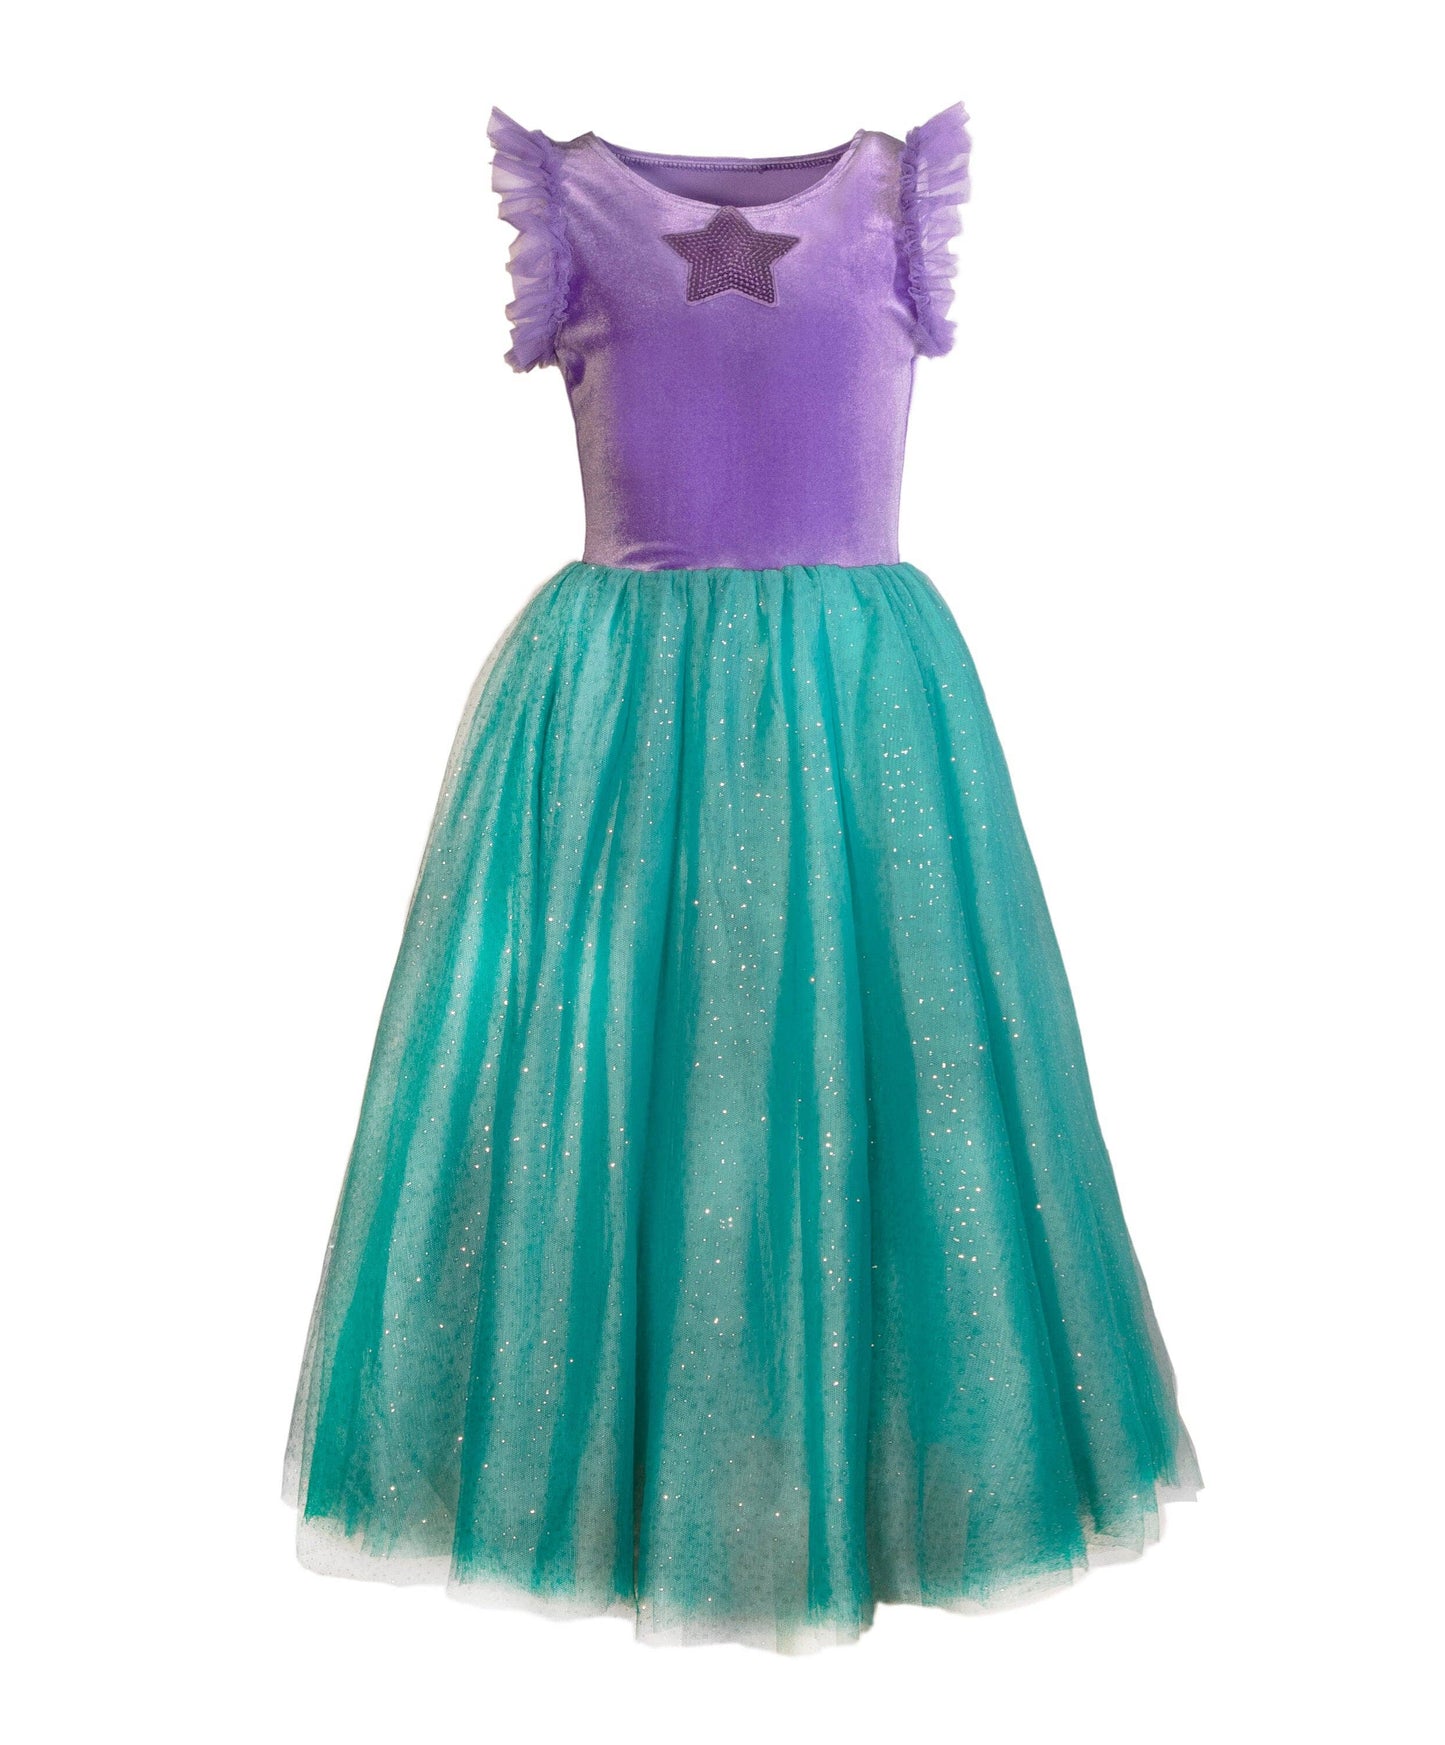 Mermaid Princess Costume Dress (S) 4-5 years